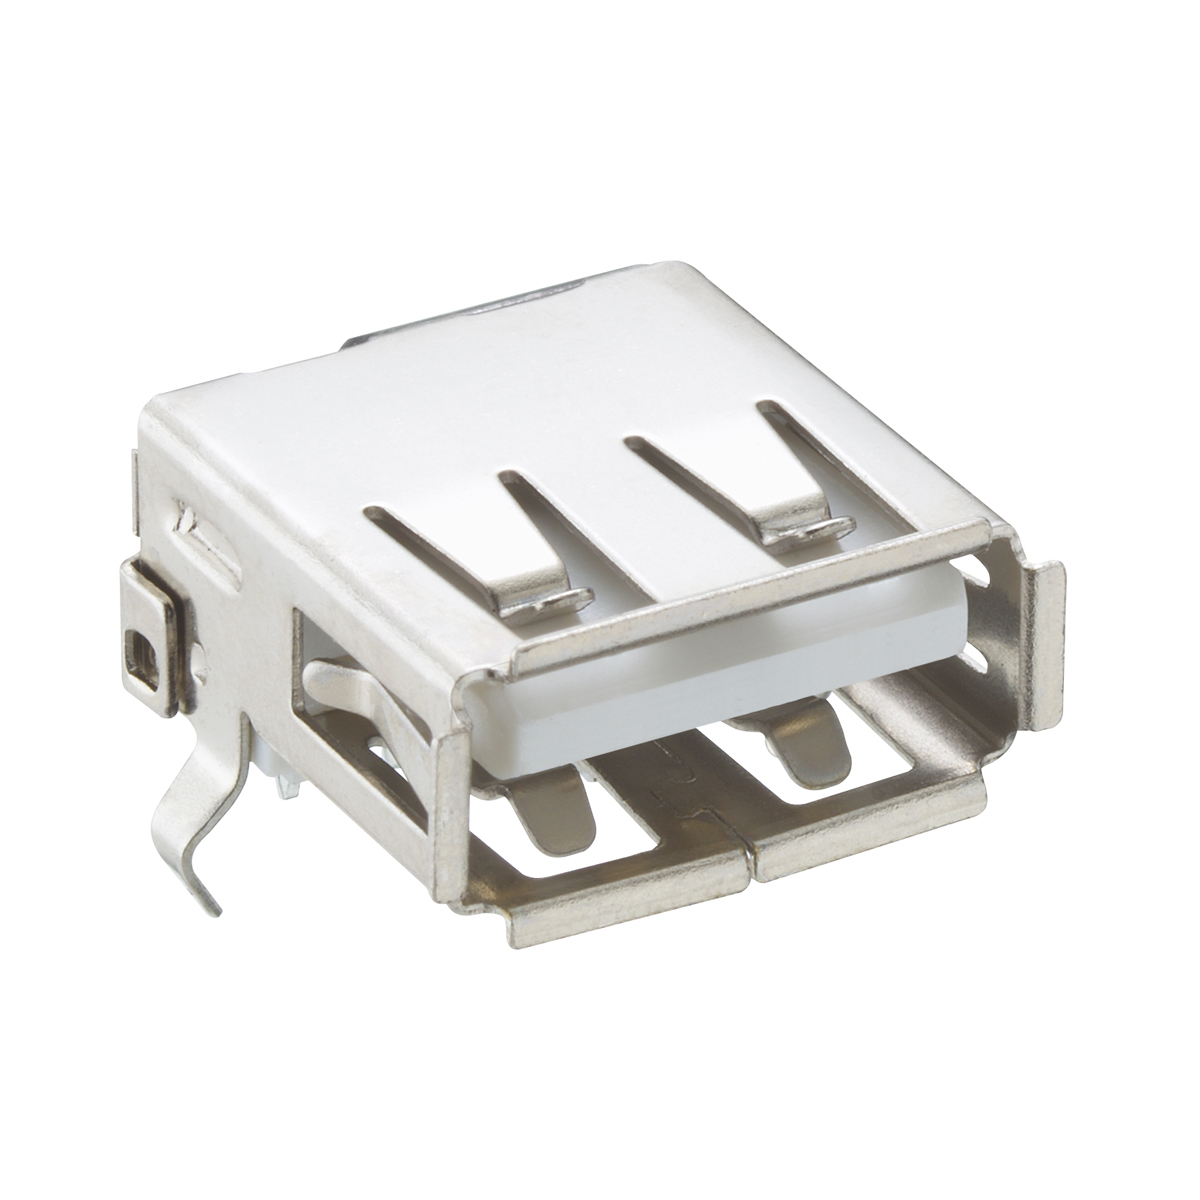 Lumberg: 2410 12 (Series 24 | USB and IEEE 1394 connectors)